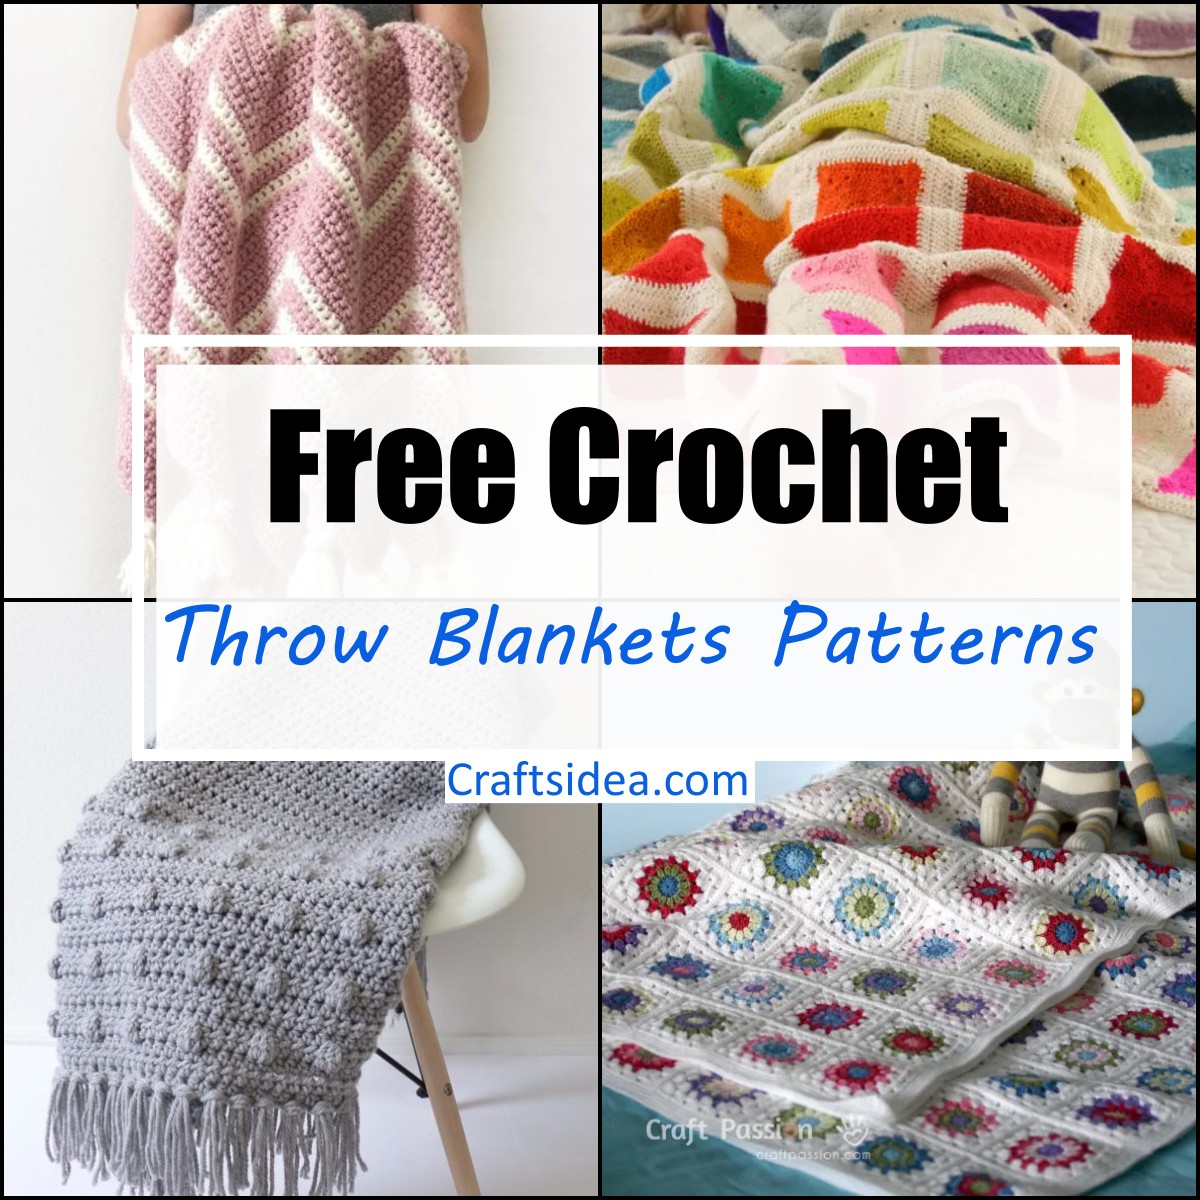 Free Crochet Throw Blankets Patterns